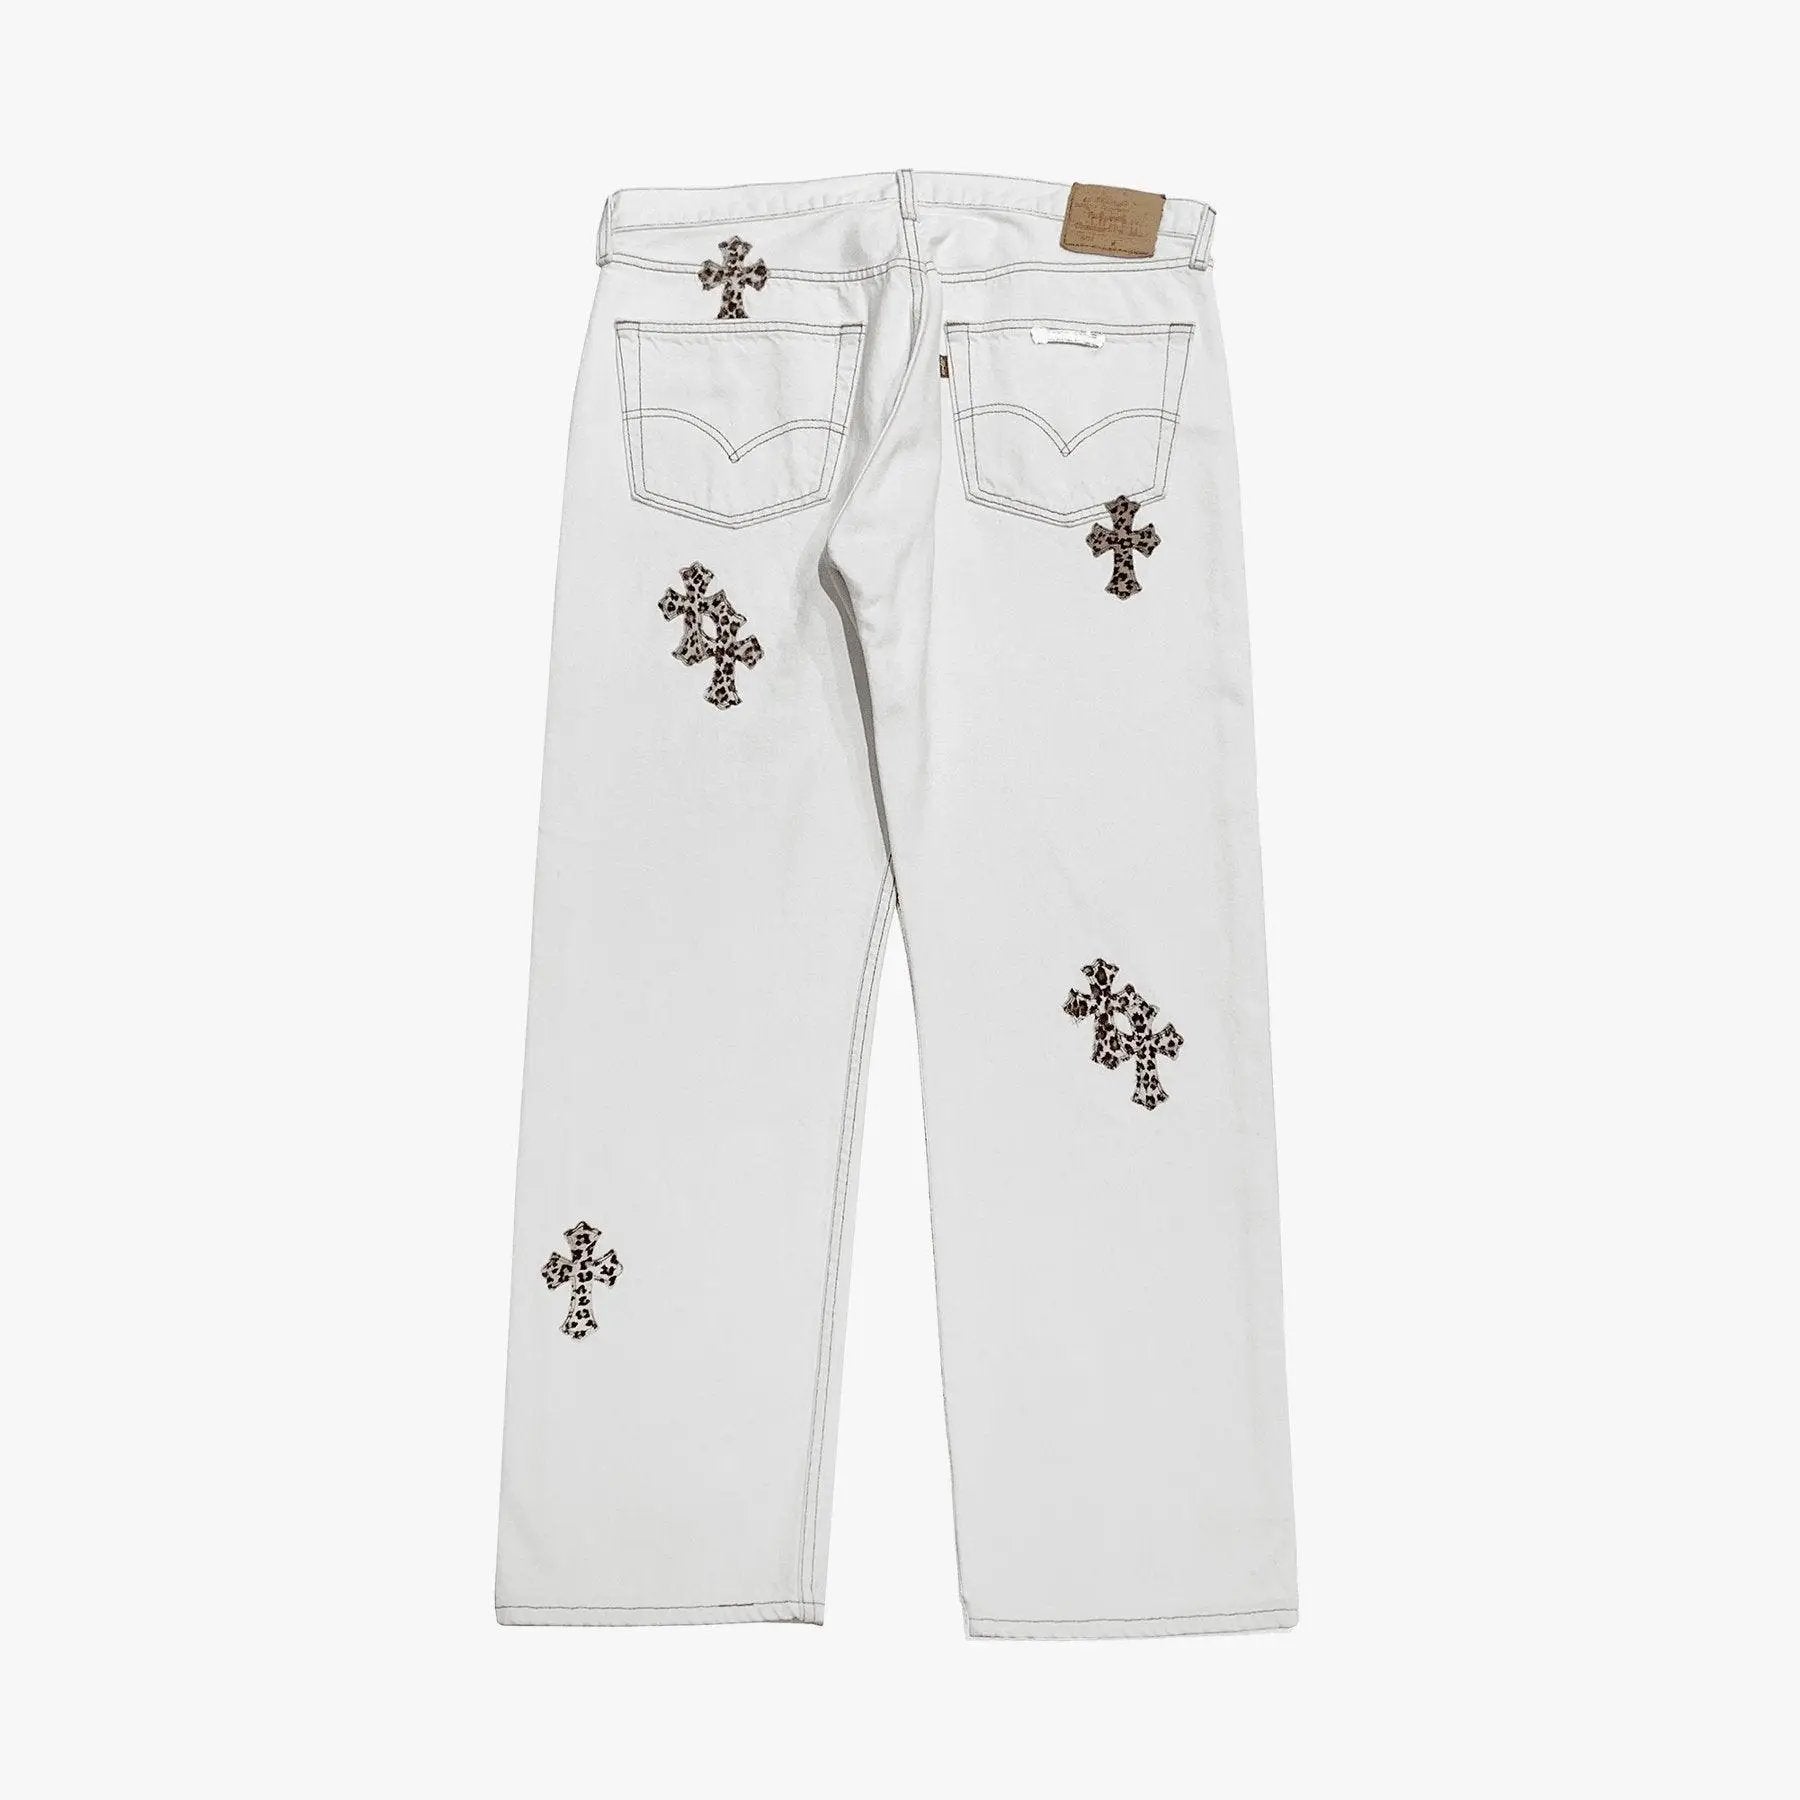 Chrome Hearts Levi's 501 Leopard Cross PATCH White Denim Jeans - SHENGLI ROAD MARKET